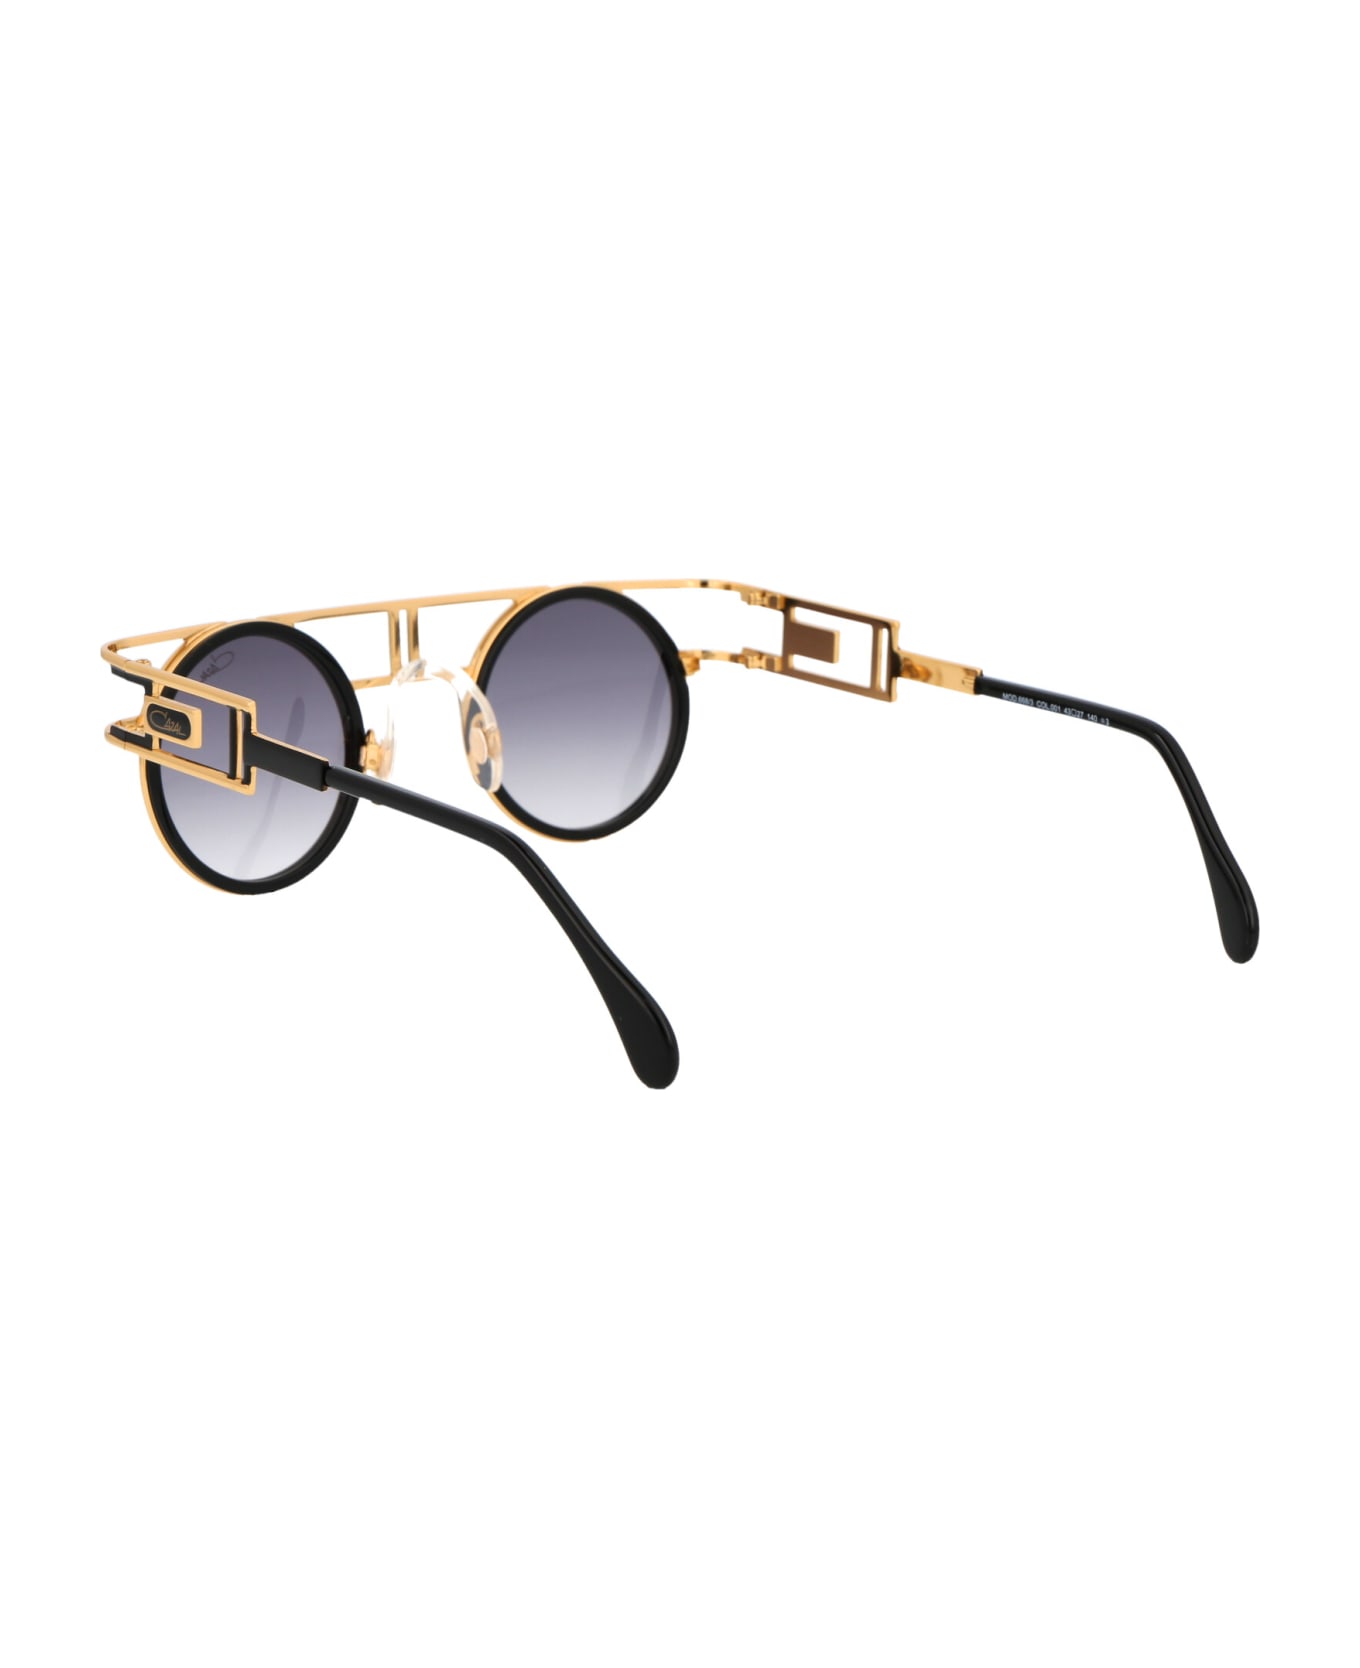 Cazal Mod. 668/3 Sunglasses - 001 BLACK